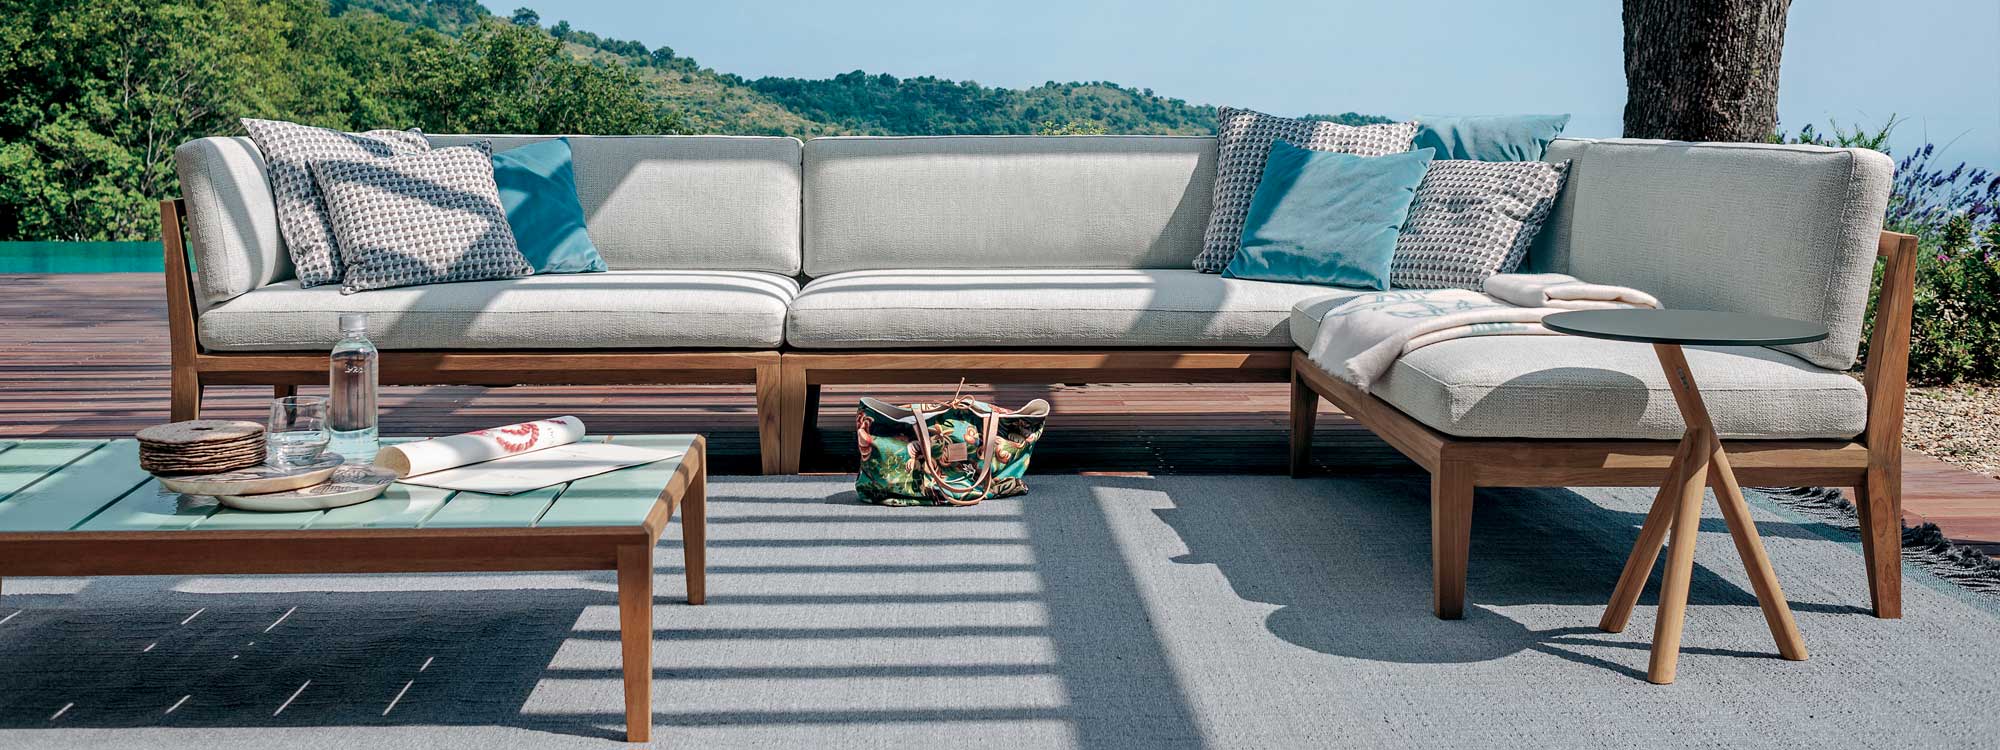 Image of RODA Teka teak garden corner sofa with heavy-knit white cushions, with Teka glazed ceramic low table and Root teak side table